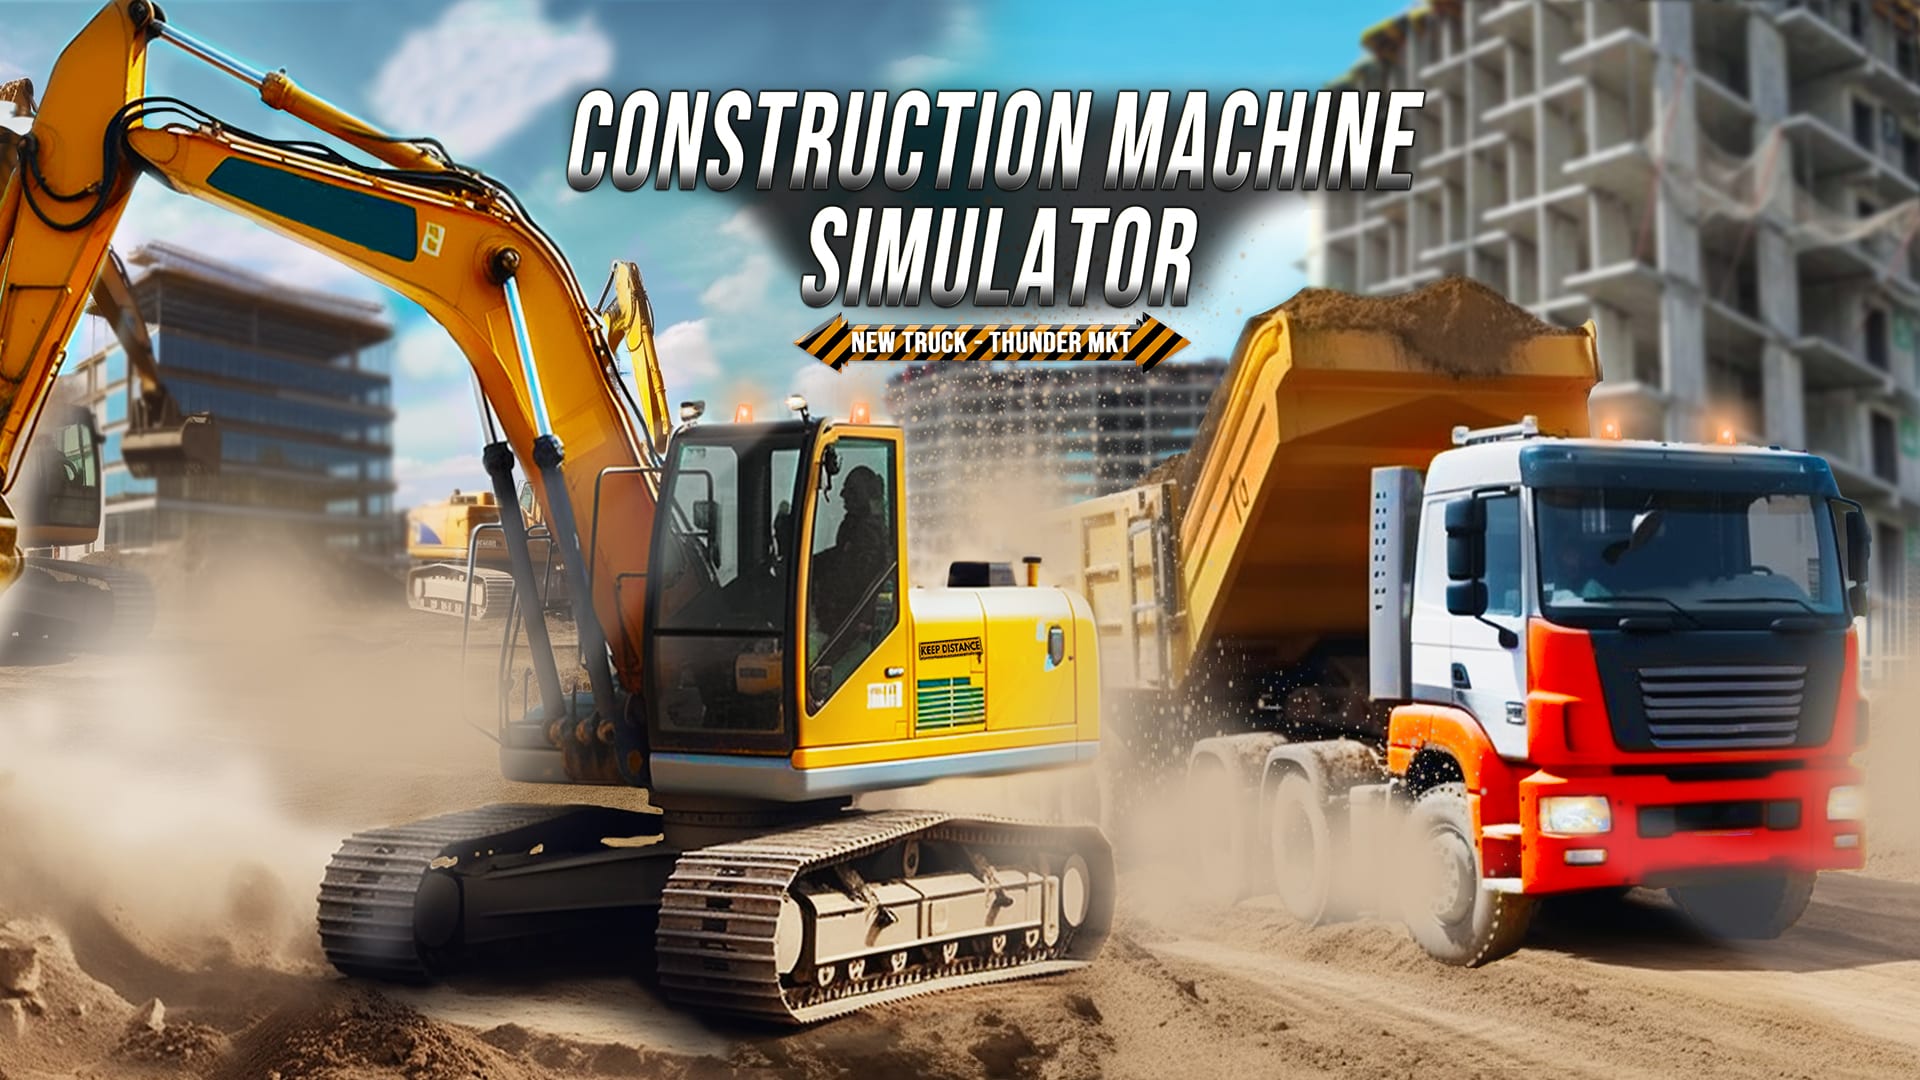 Construction Machine Simulator: New Truck - Thunder MKT